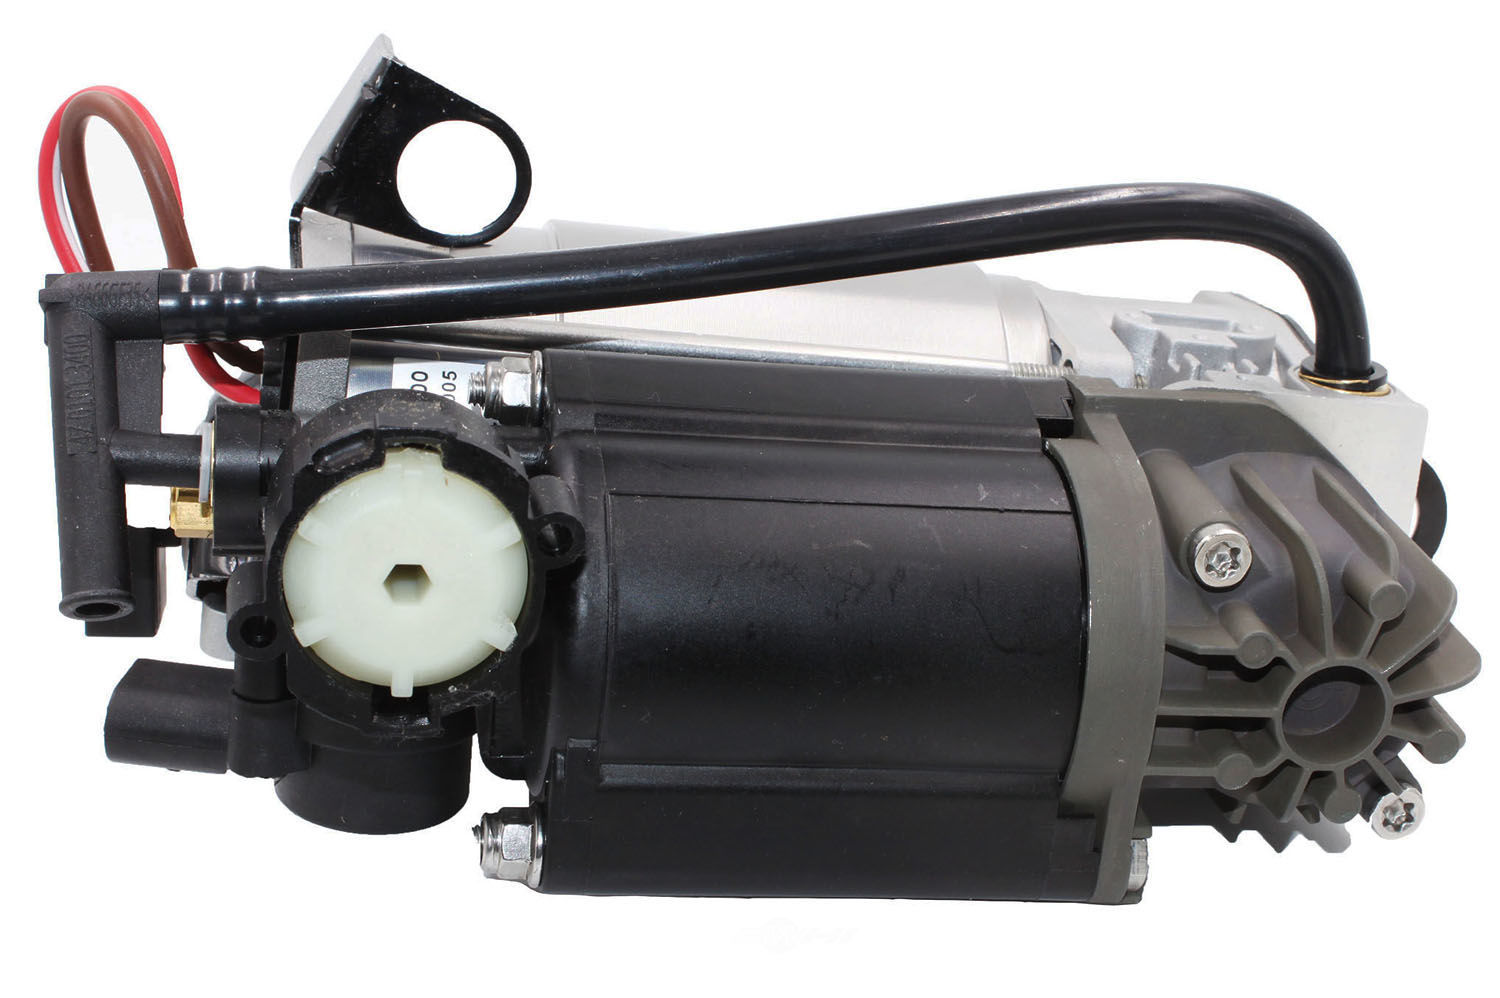 WESTAR - Suspension Air Compressor / Dryer Vibration Isolator Kit - WSR CD-7727